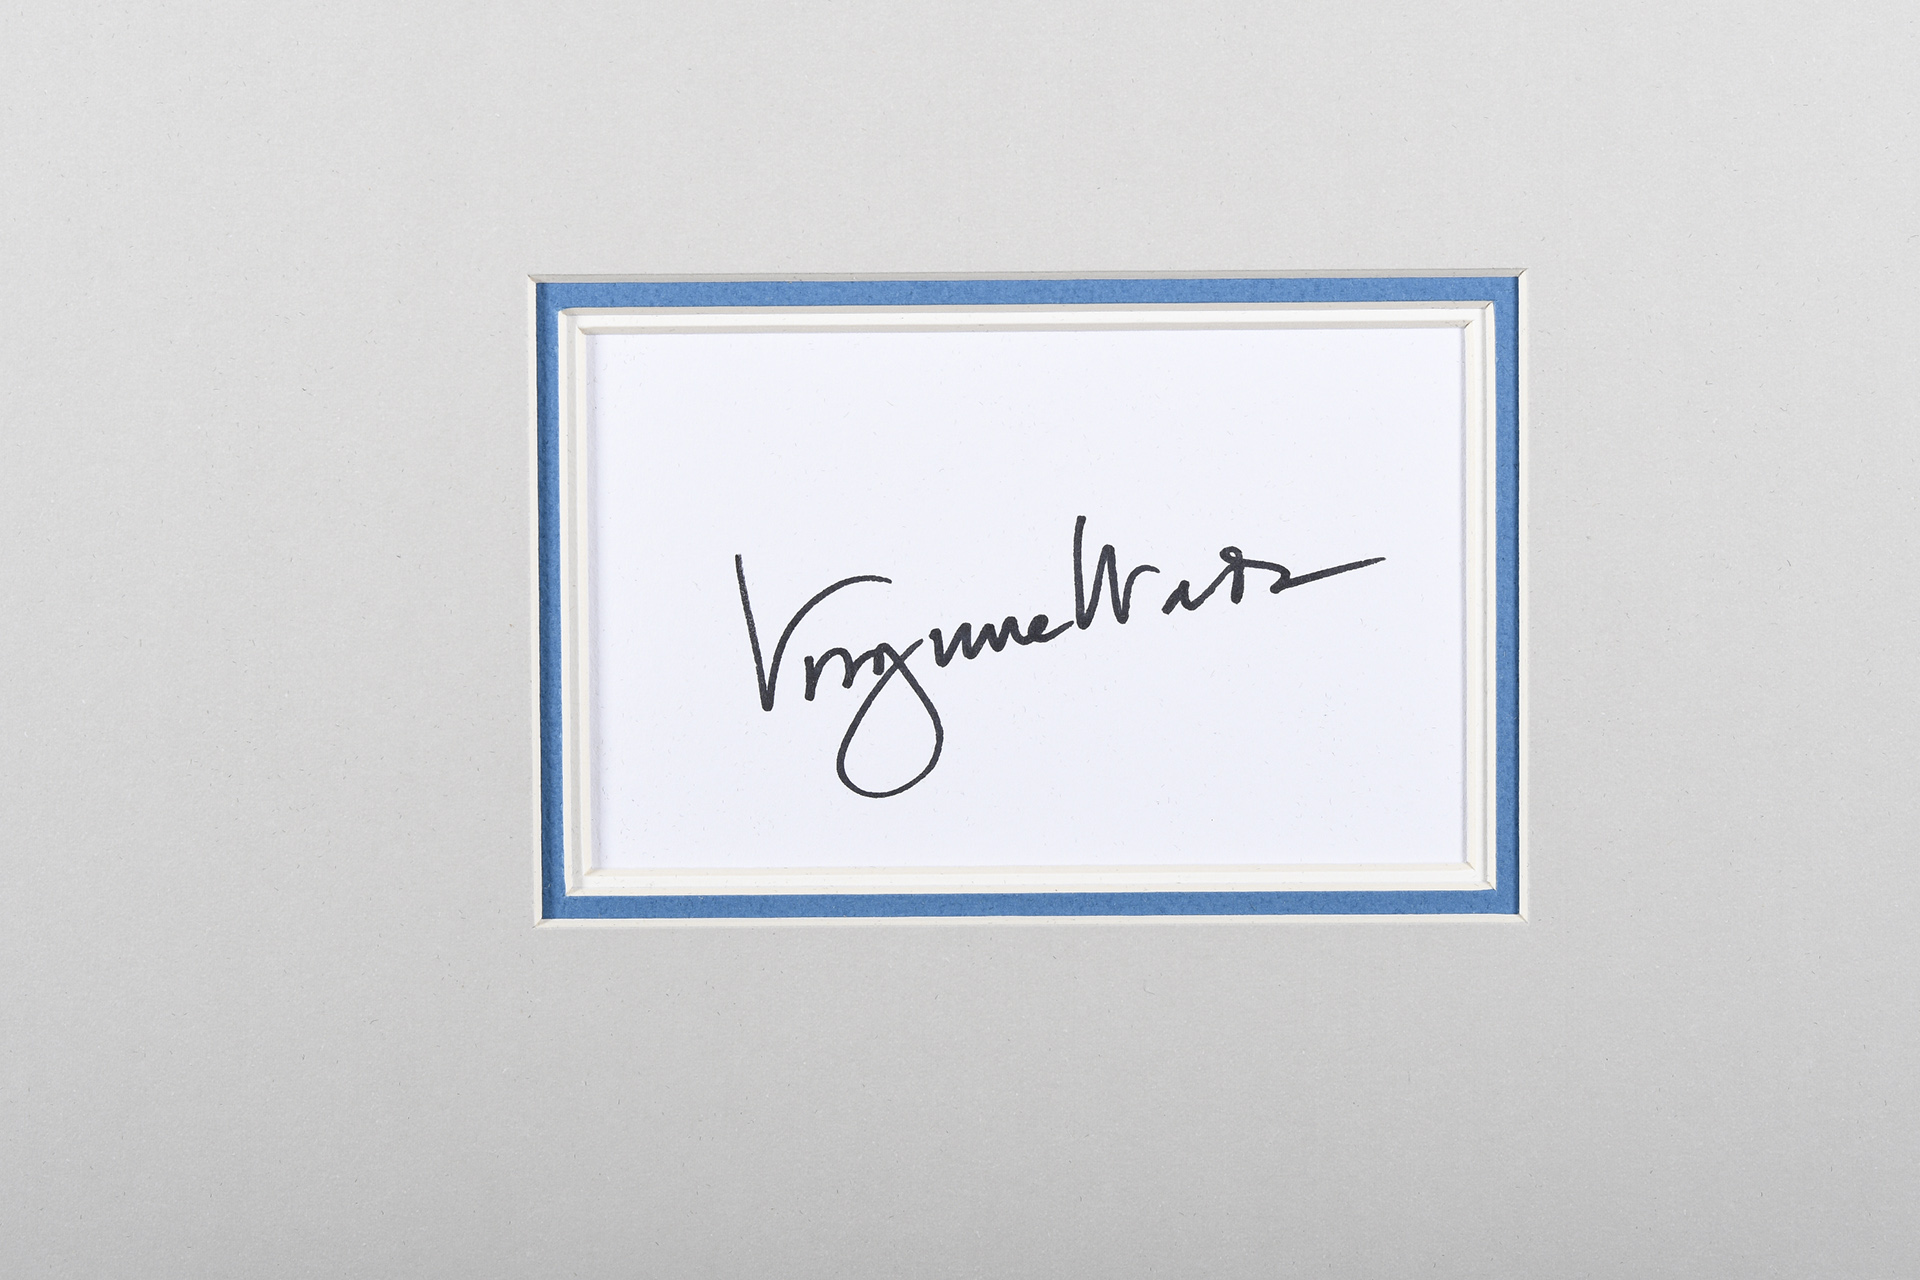 Virginia Wade Original Signature in Presentation